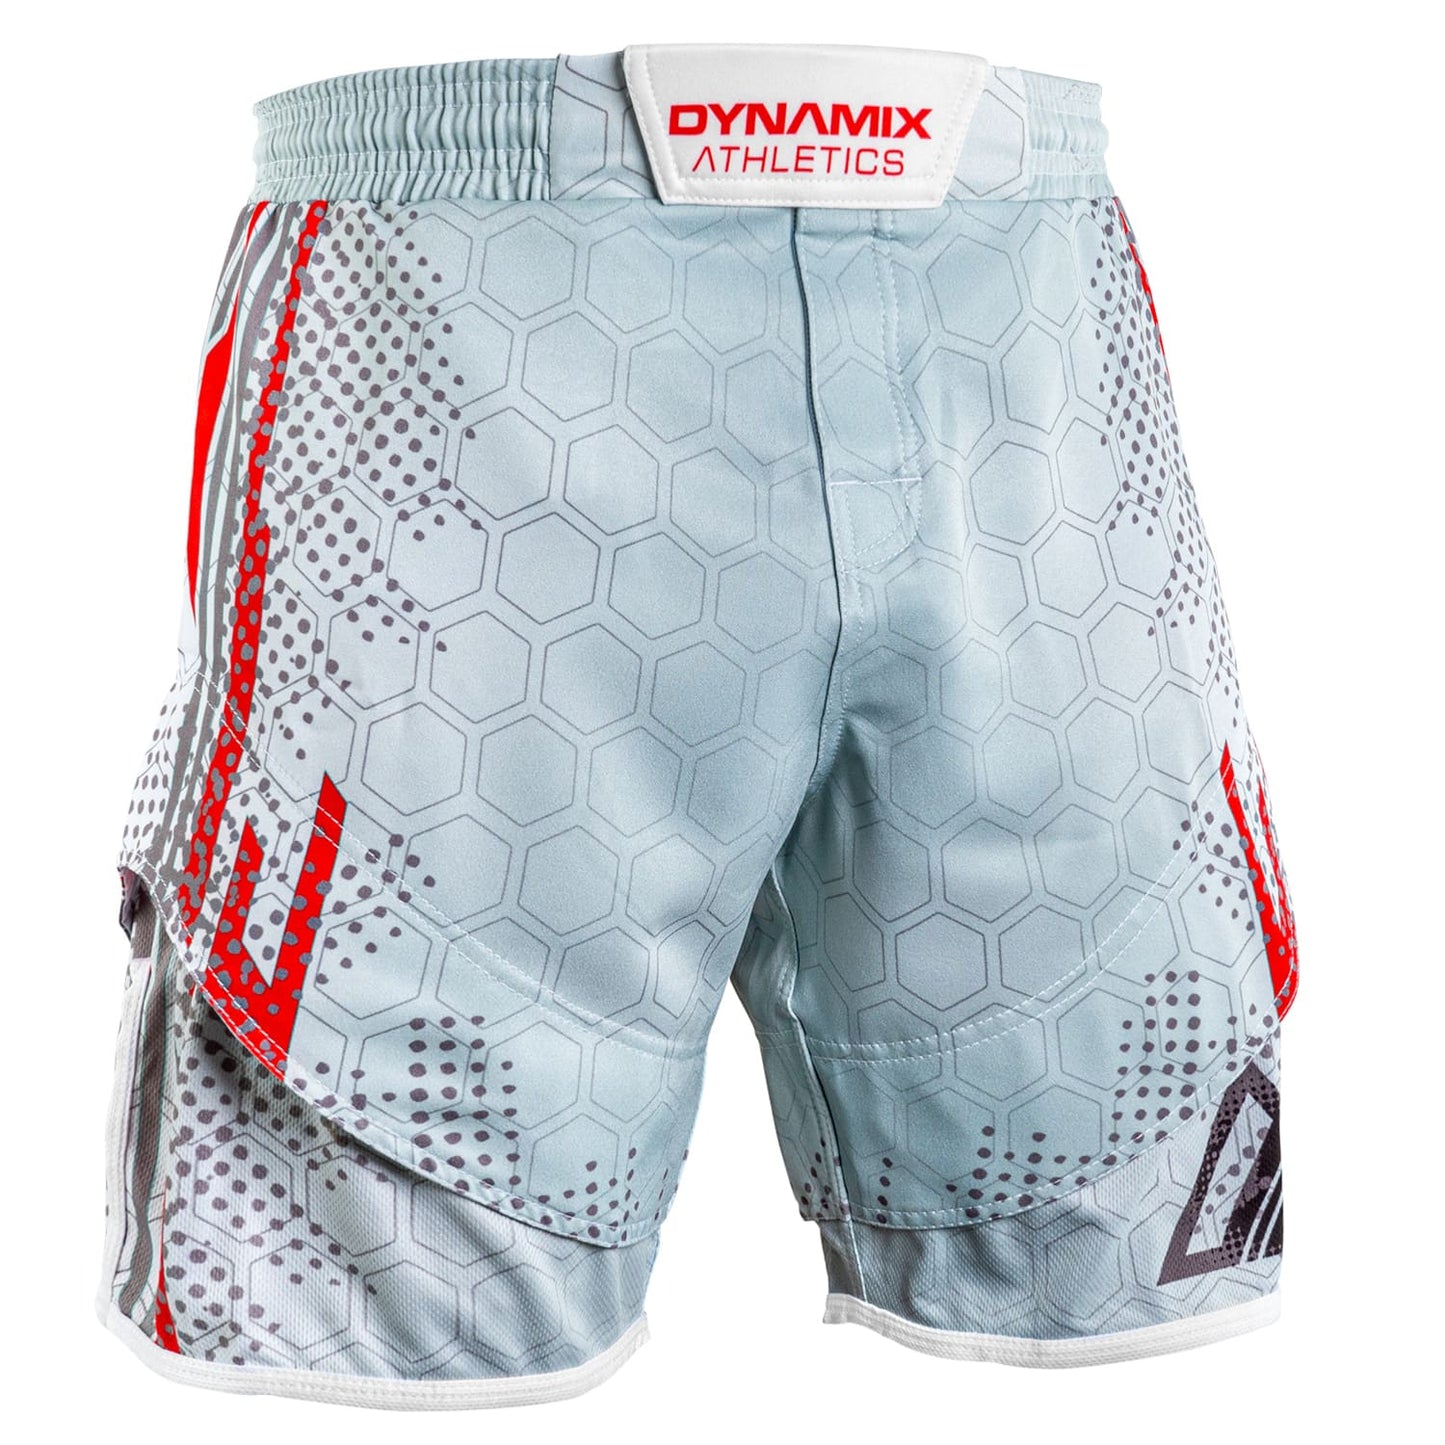 Dynamix Athletics Hybrid MMA Fight Shorts Sharp - Arctic White